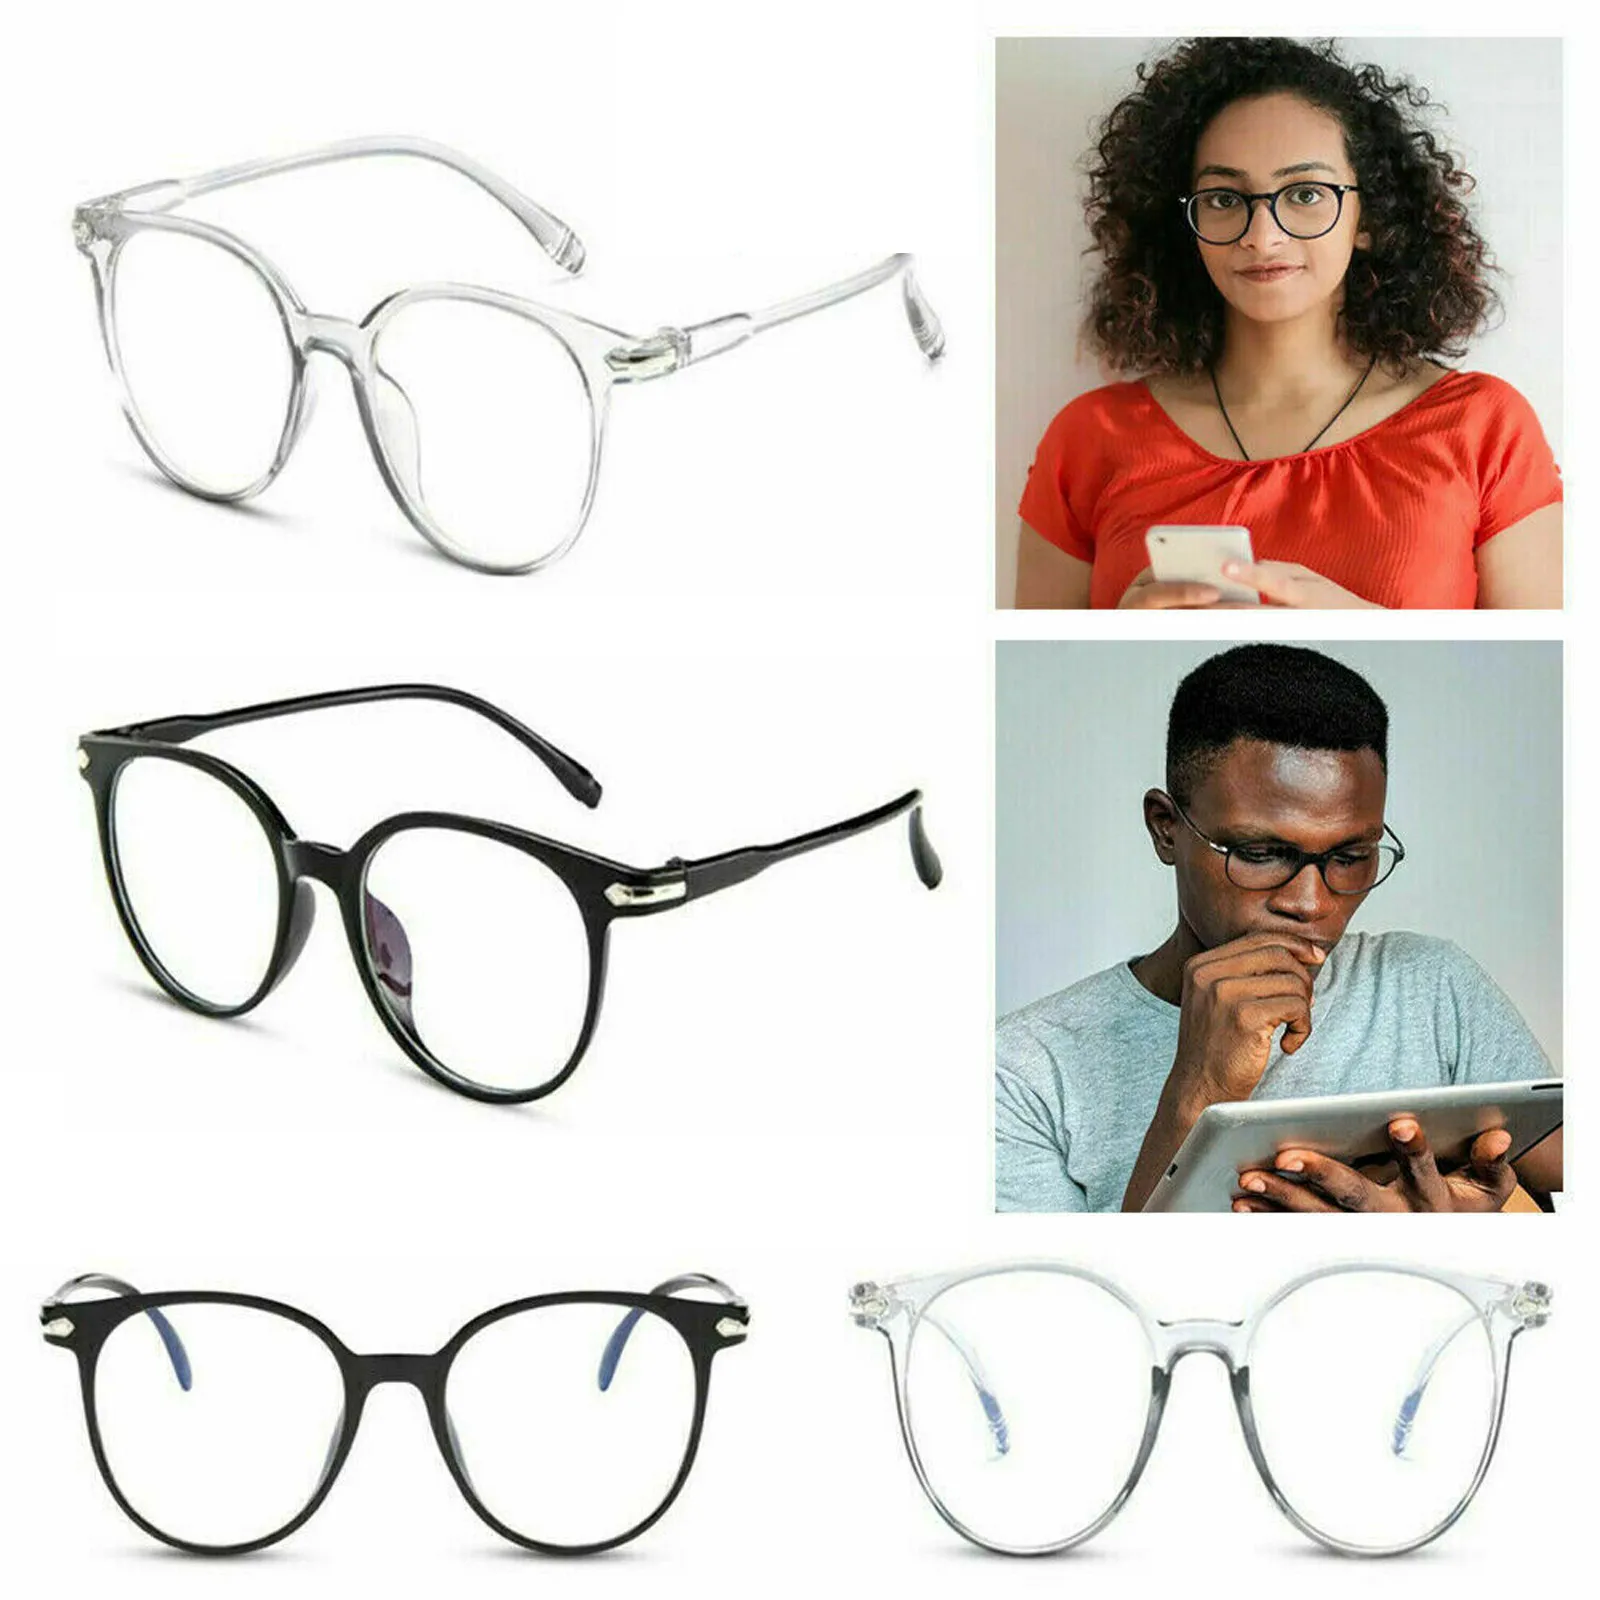 Decorative Glasses Gaming Glasses Computer Anti-fatigue Blue Light Blocking Filter Eyeglasses Woman And Men's Glasses Очки#3 blue light blocking reading glasses